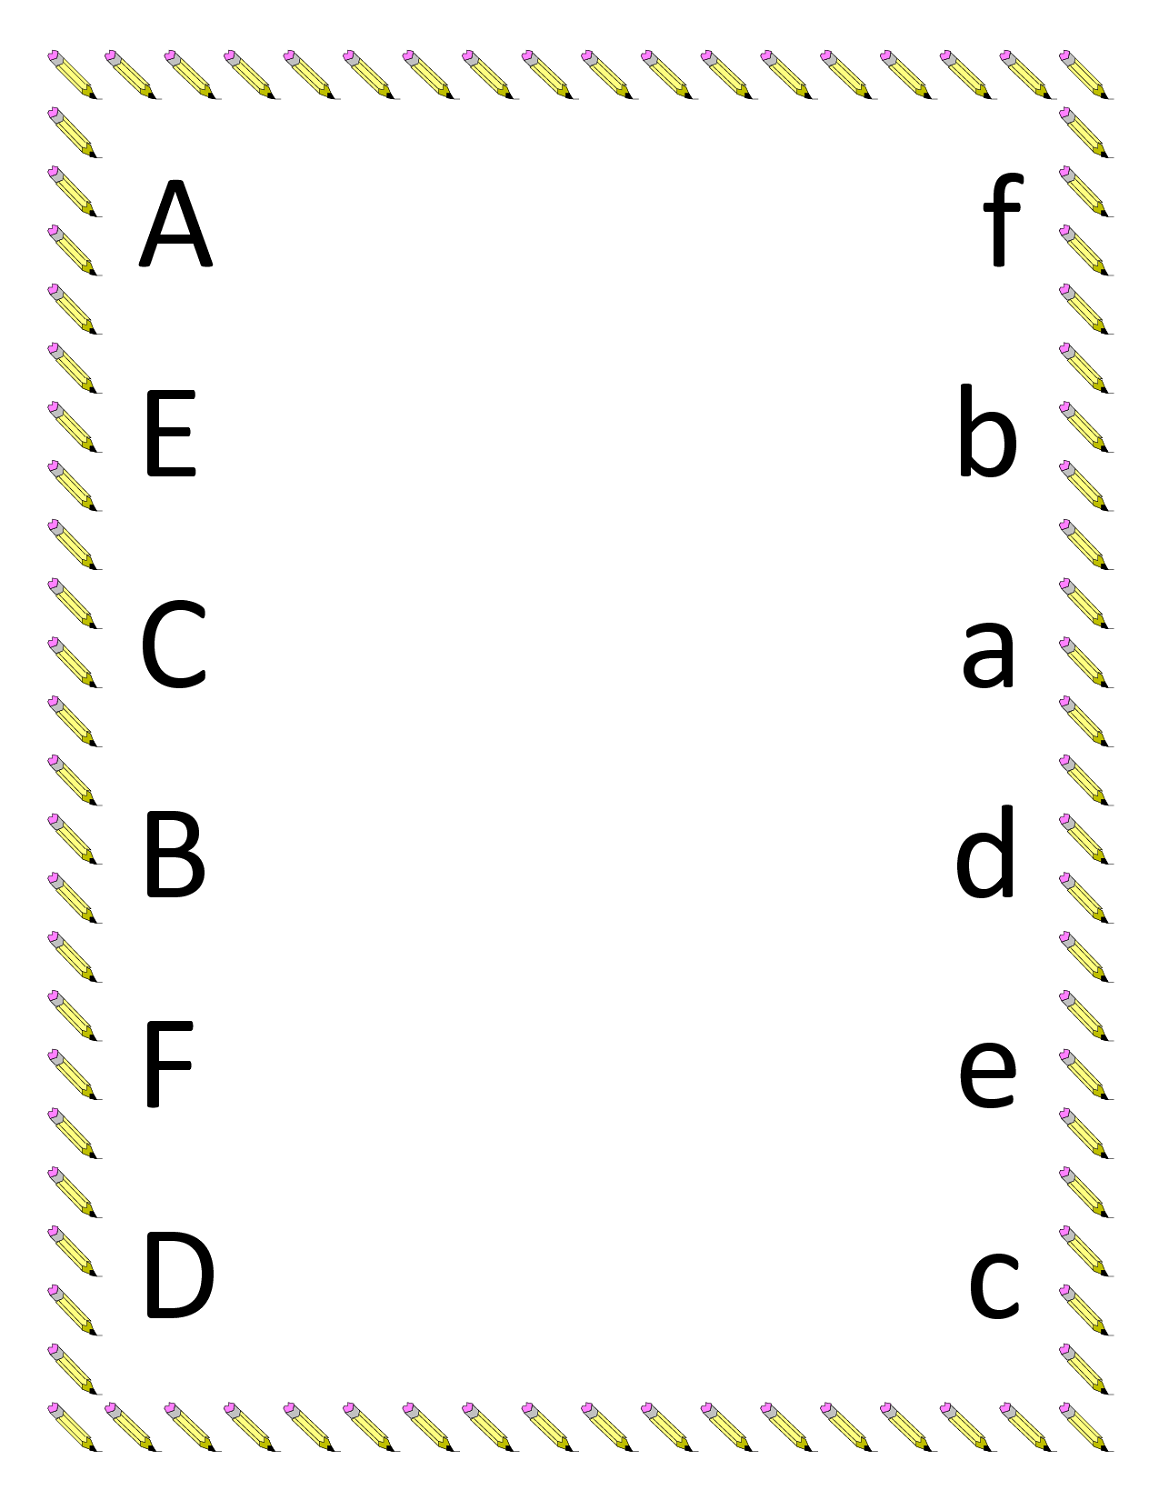 free-kindergarten-worksheets-activity-shelter-19-nursery-alphabet